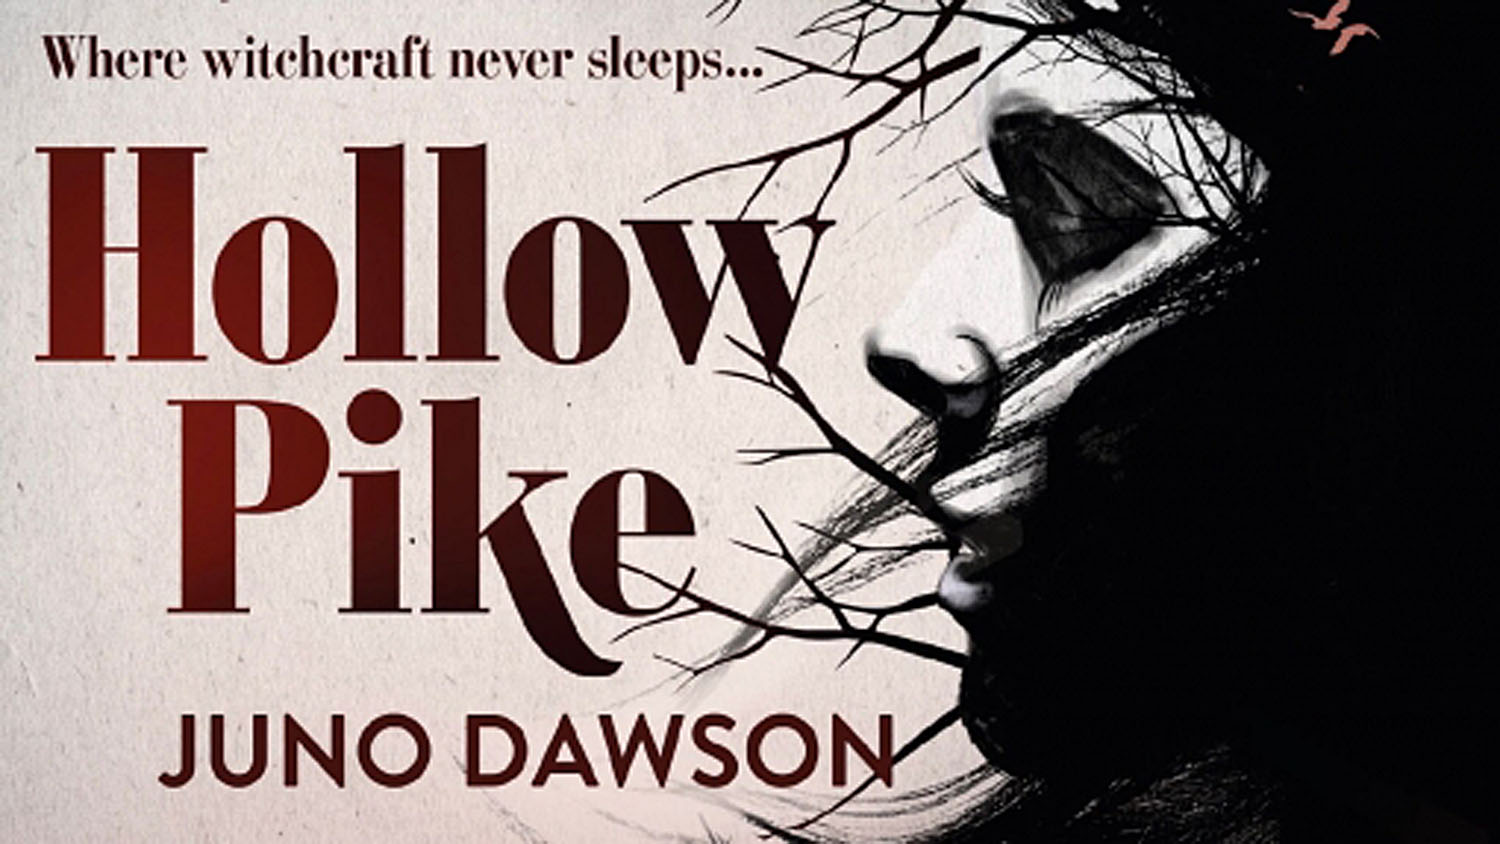 Lime pictures options Juno Dawson YA novel Hollow Pike